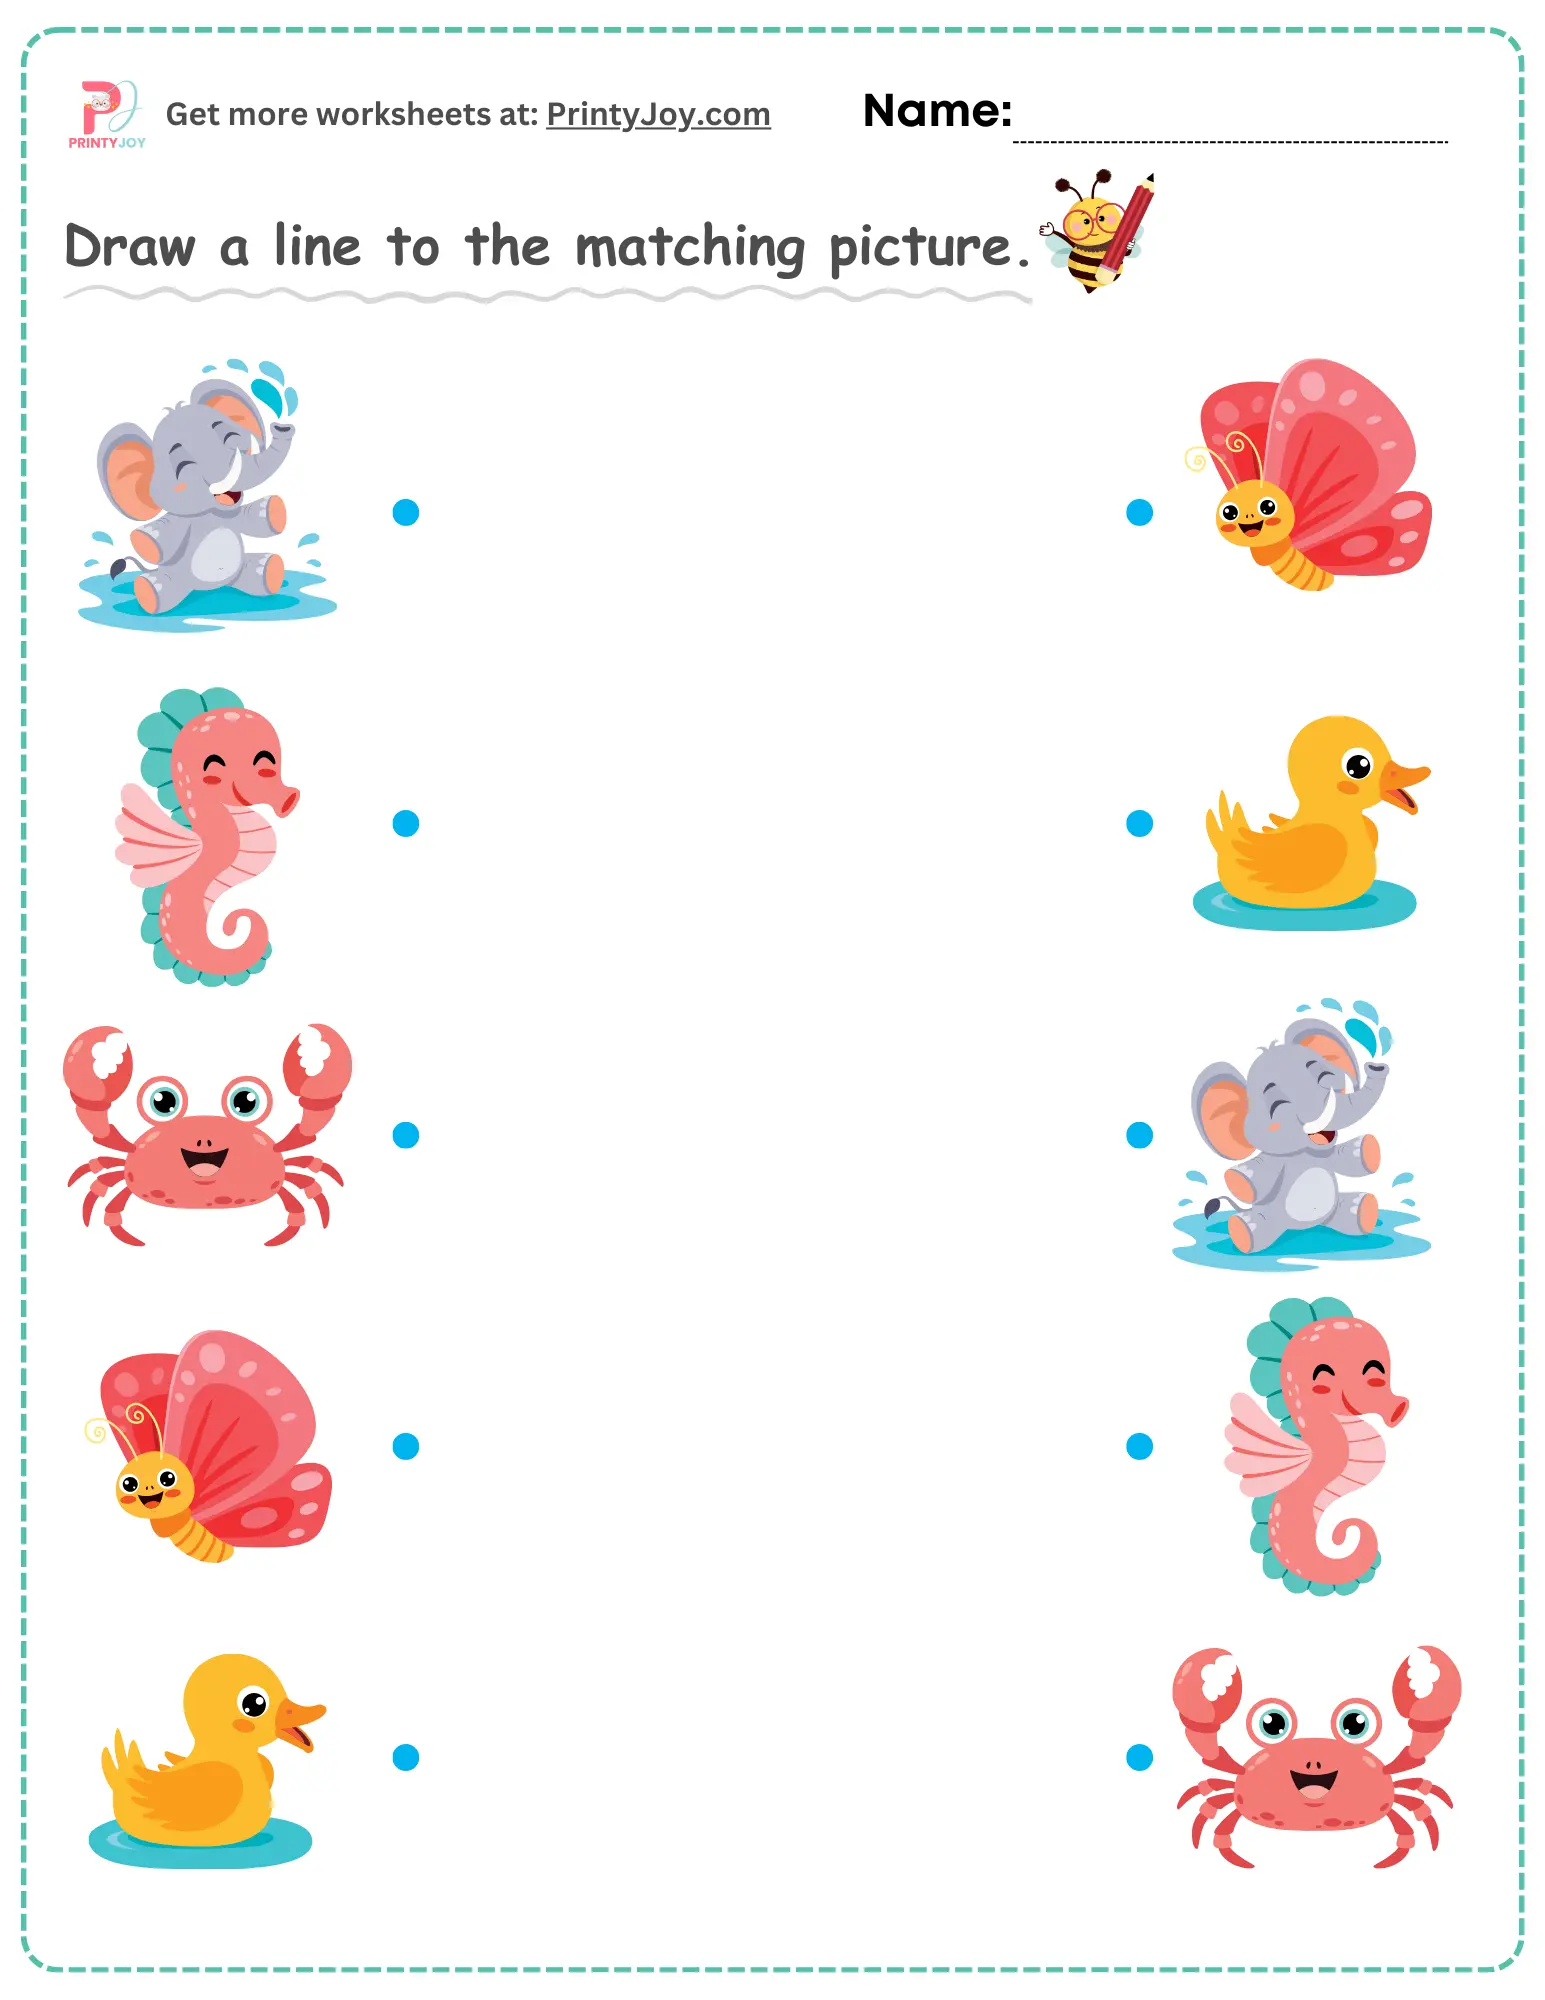 Free Printable Matching Worksheets, animals matching worksheets